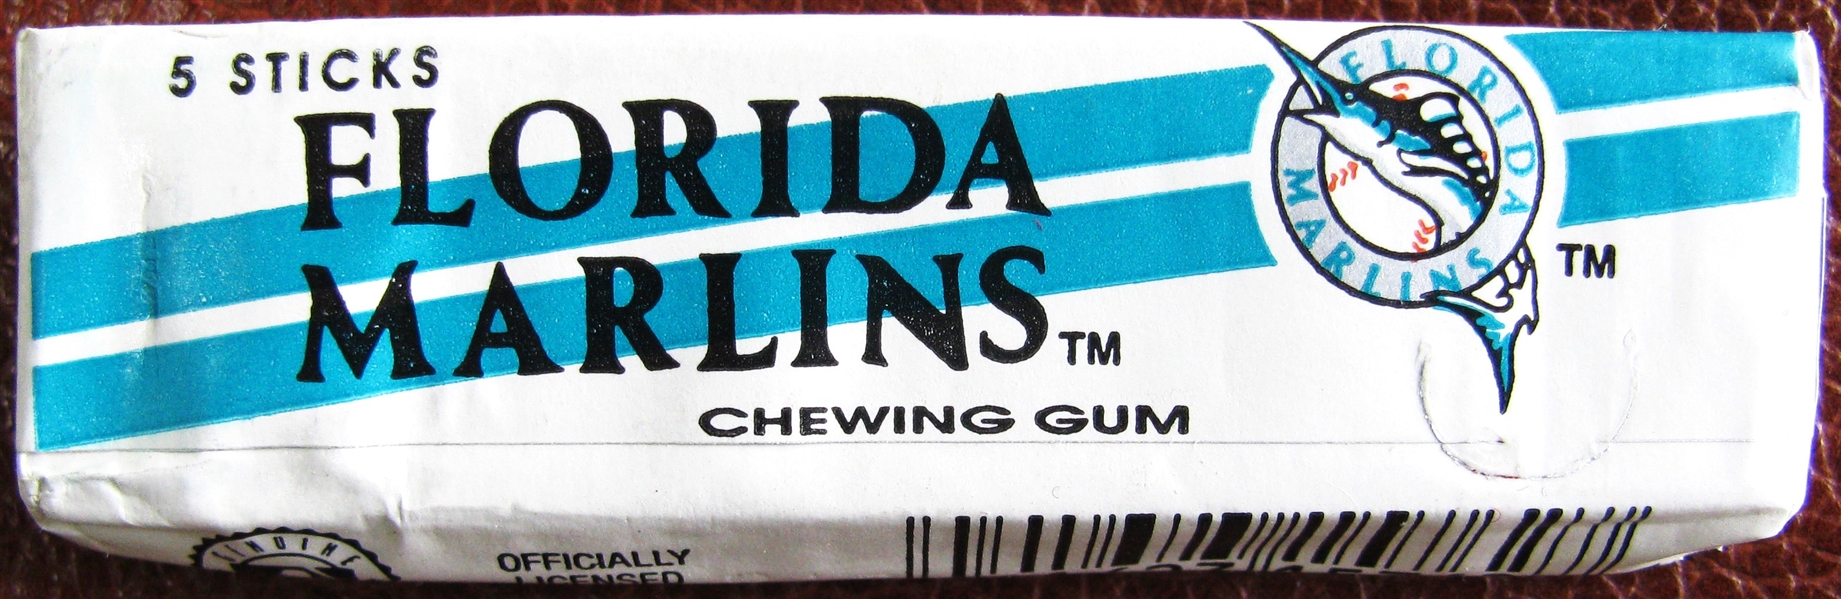 FLORIDA MARLINS CHEWING GUM - SEALED